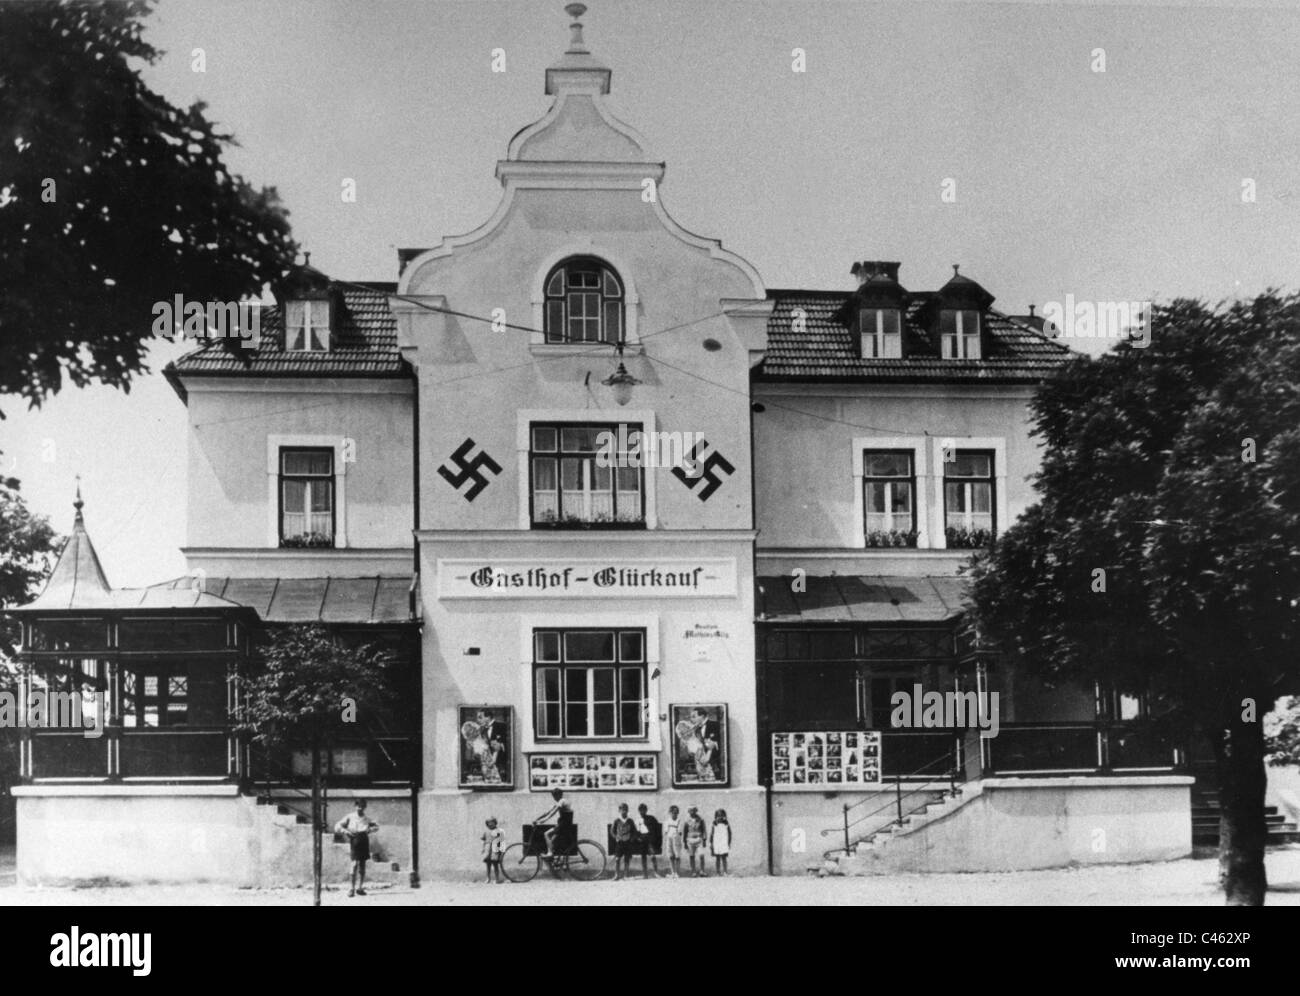 Nazi Germany: Everyday life, 1933-1945 Stock Photo